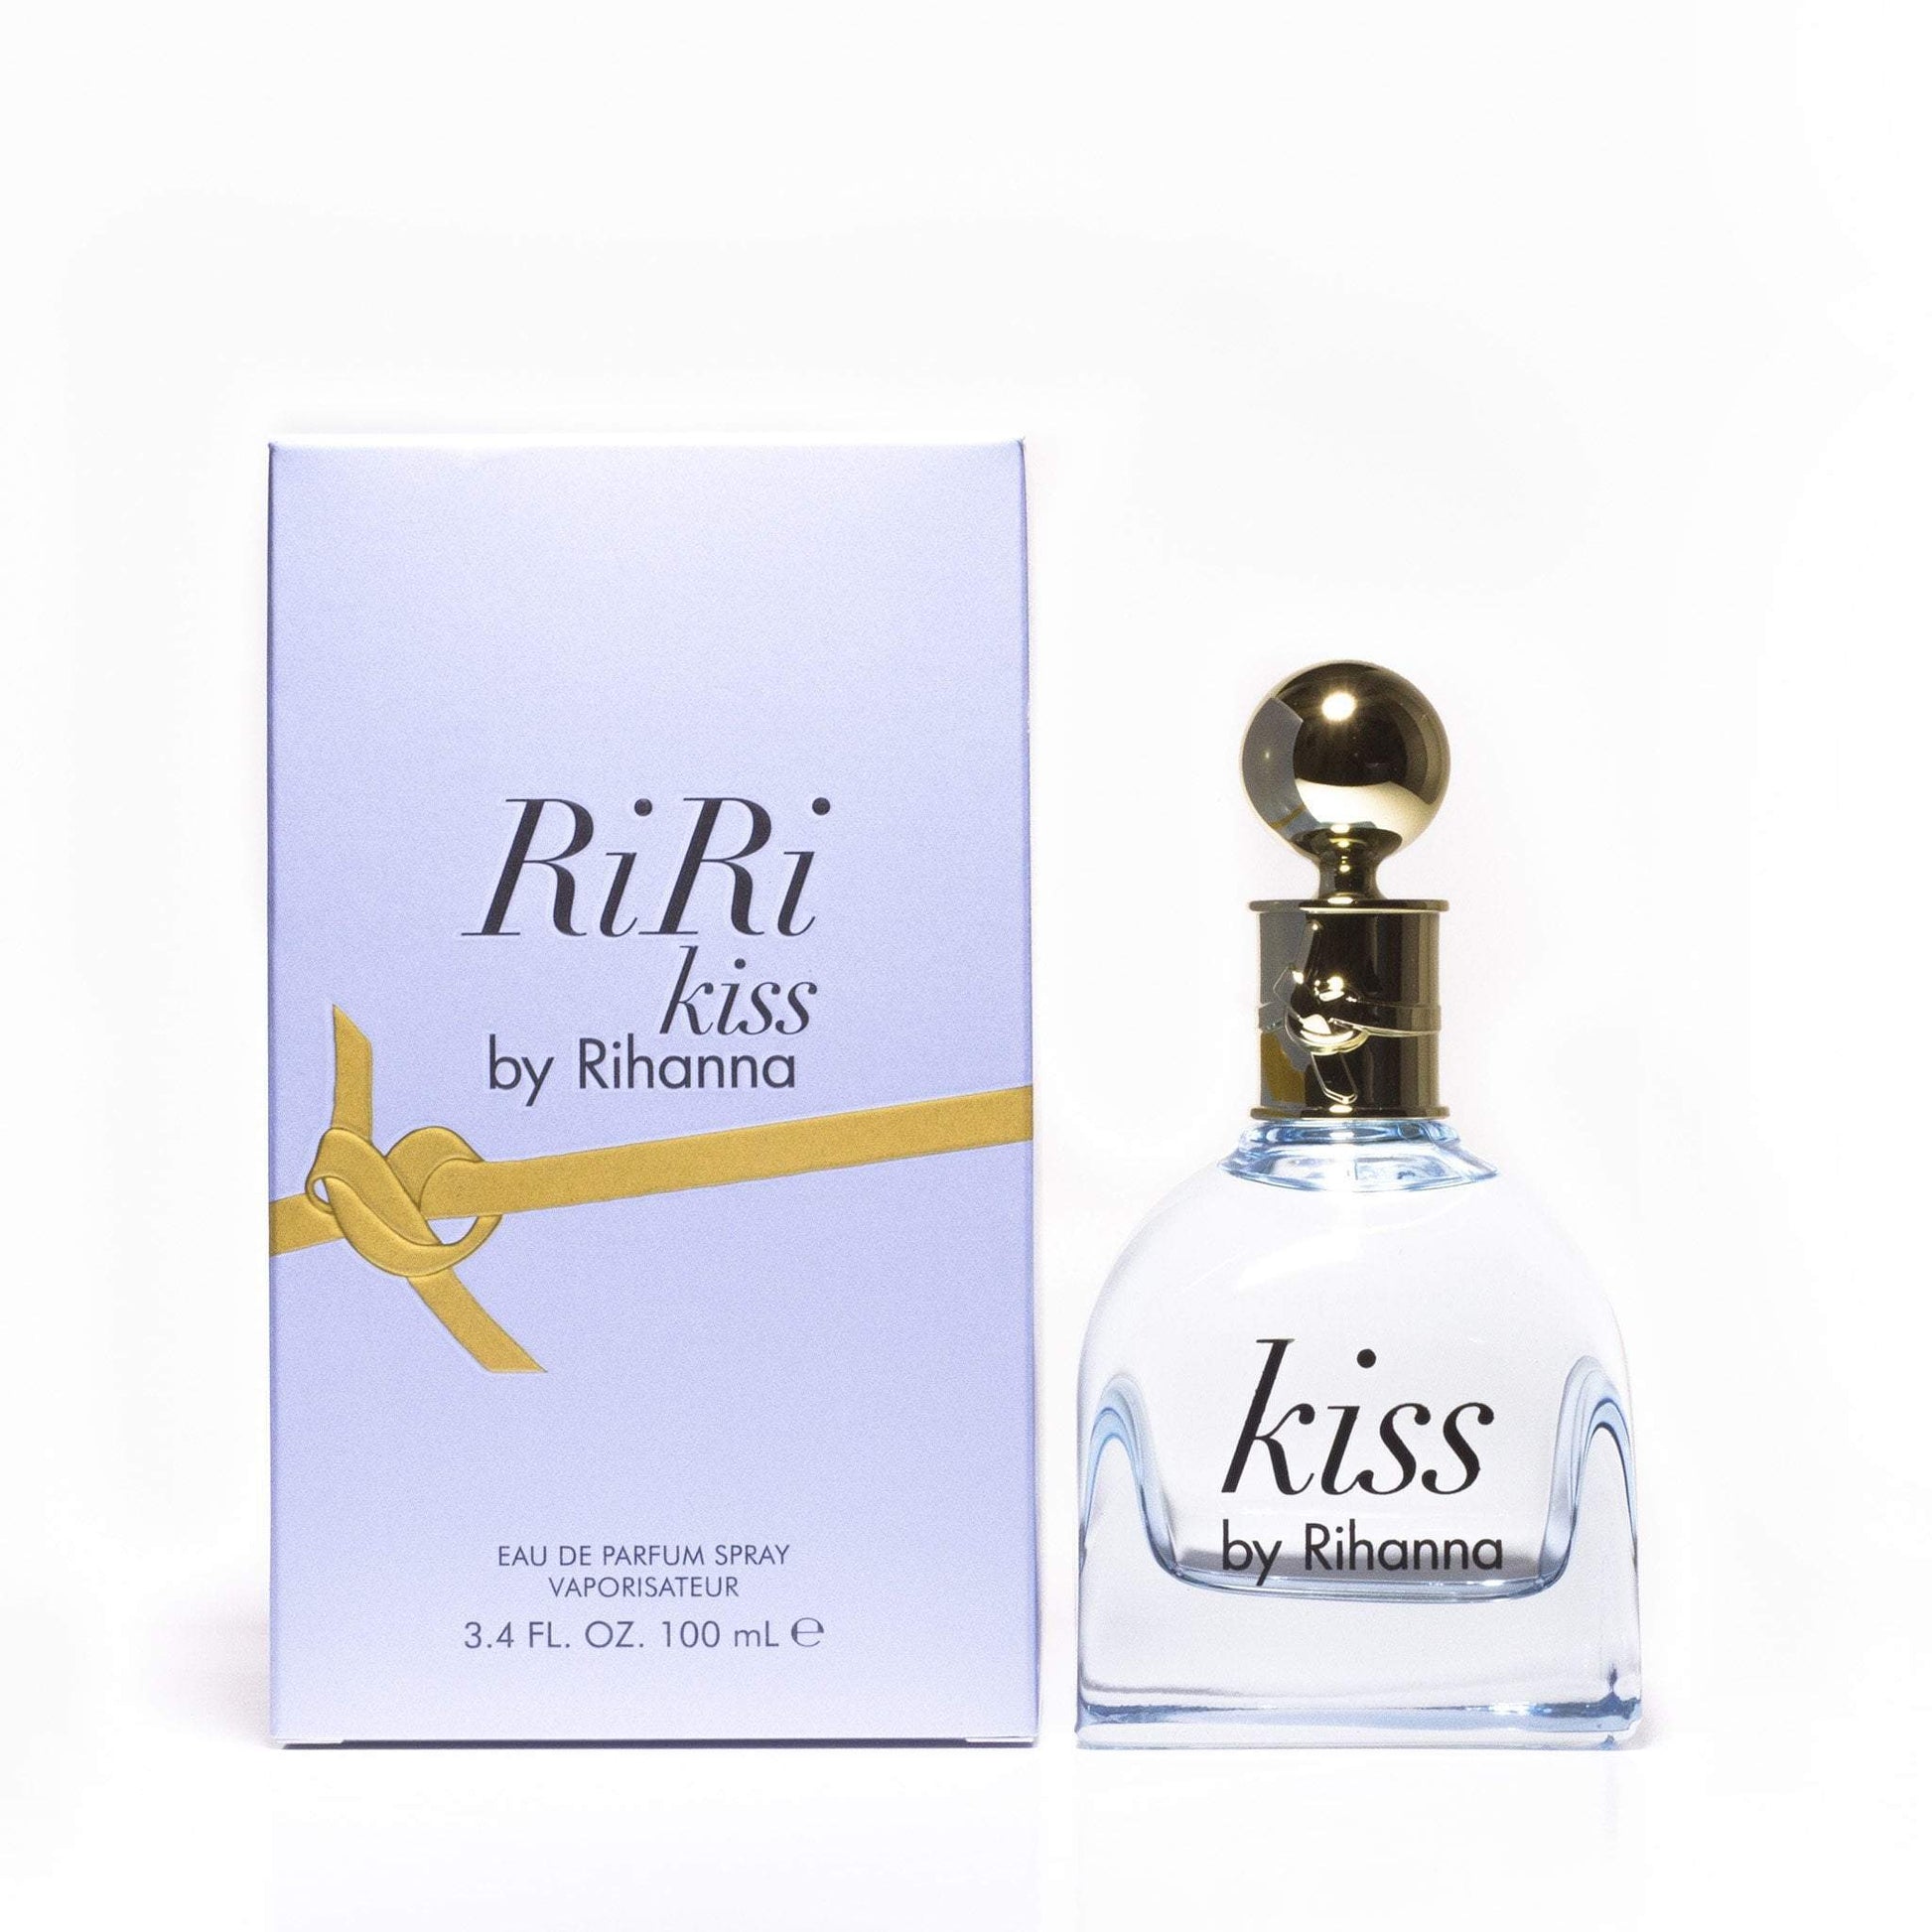 Ri Ri Kiss Eau de Parfum Spray for Women by Rihanna 3.4 oz. Click to open in modal